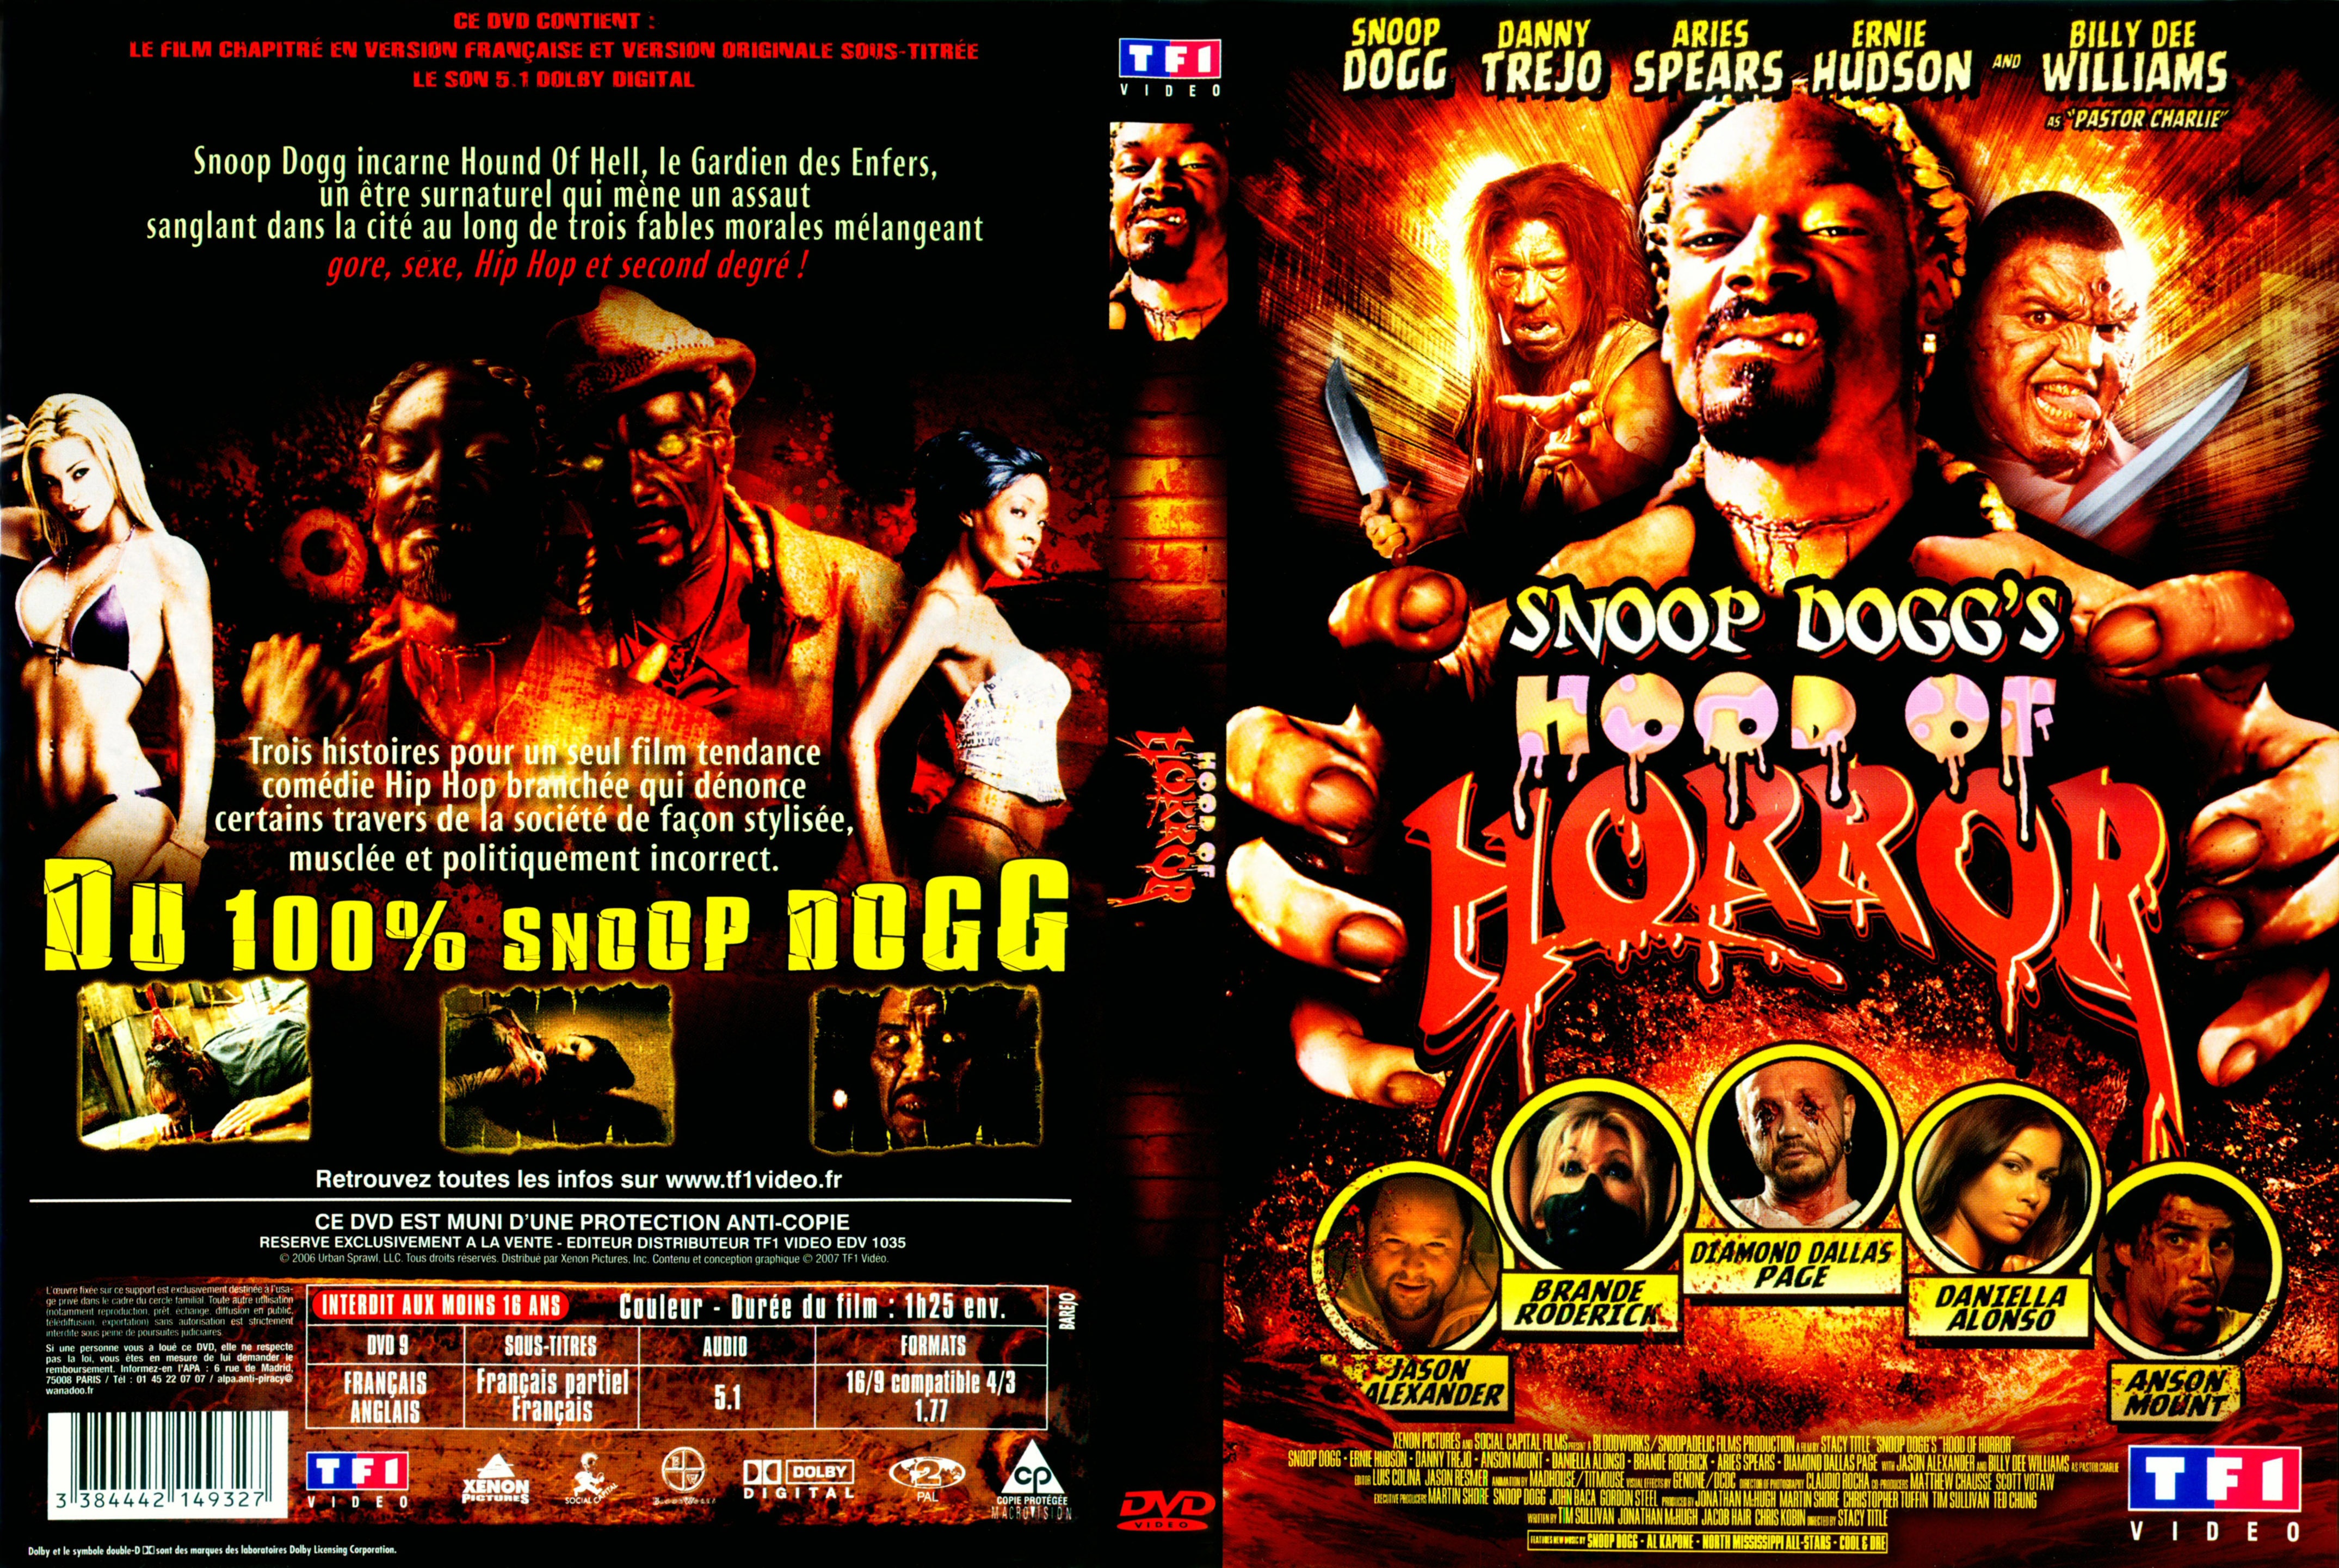 Jaquette DVD Hood of horror